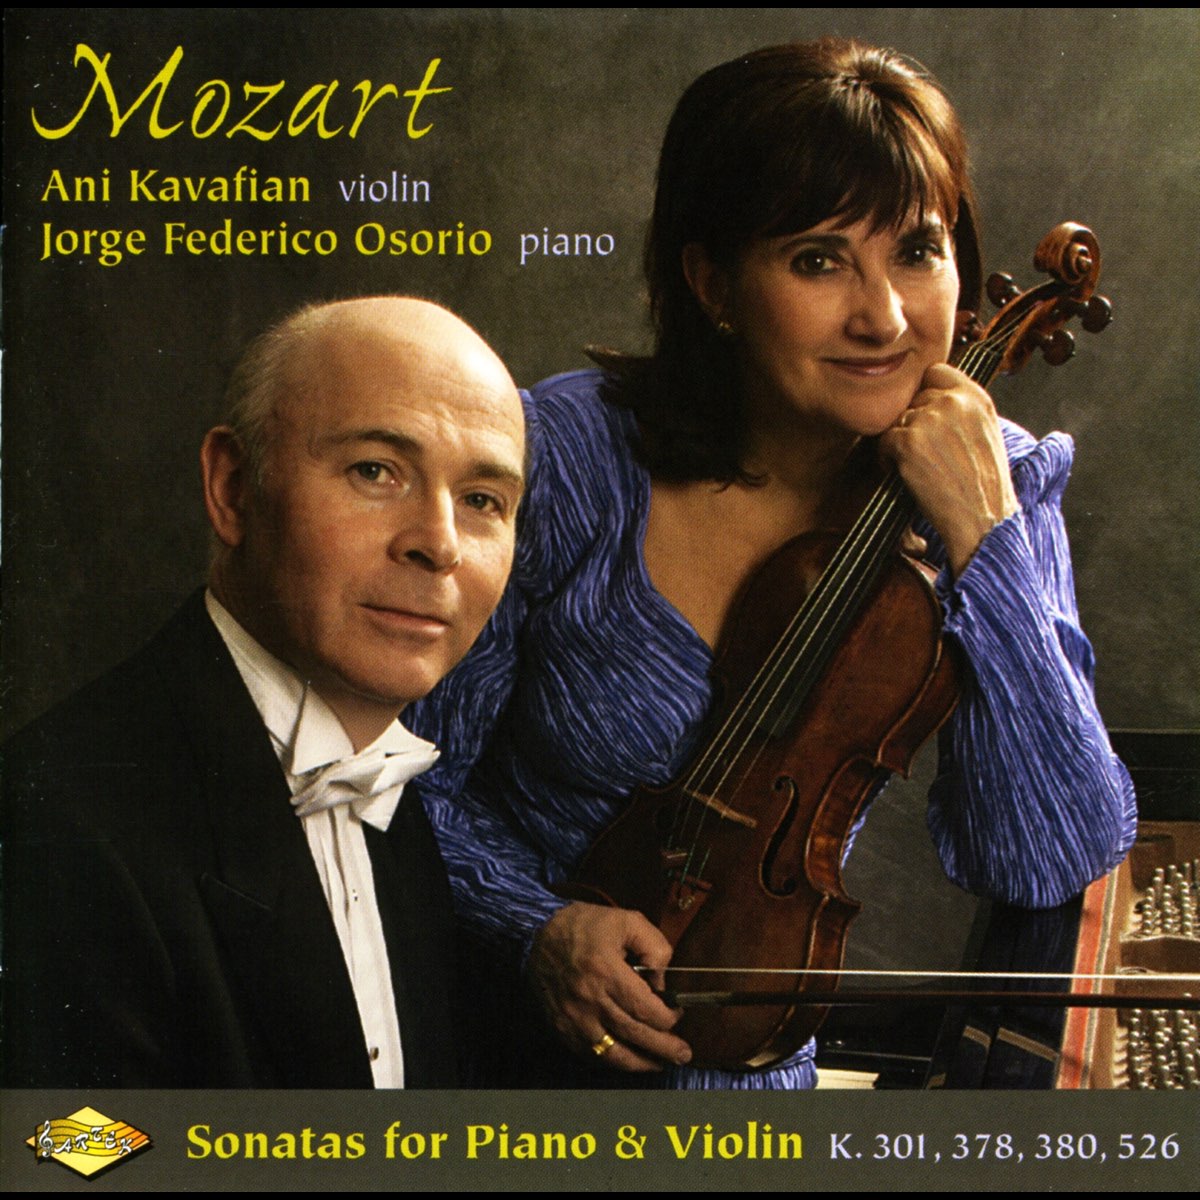 Mozart: Violin Sonatas, K. 301, K. 378, K. 380 and K. 526 by Ani Kavafian & Jorge  Federico Osorio on Apple Music